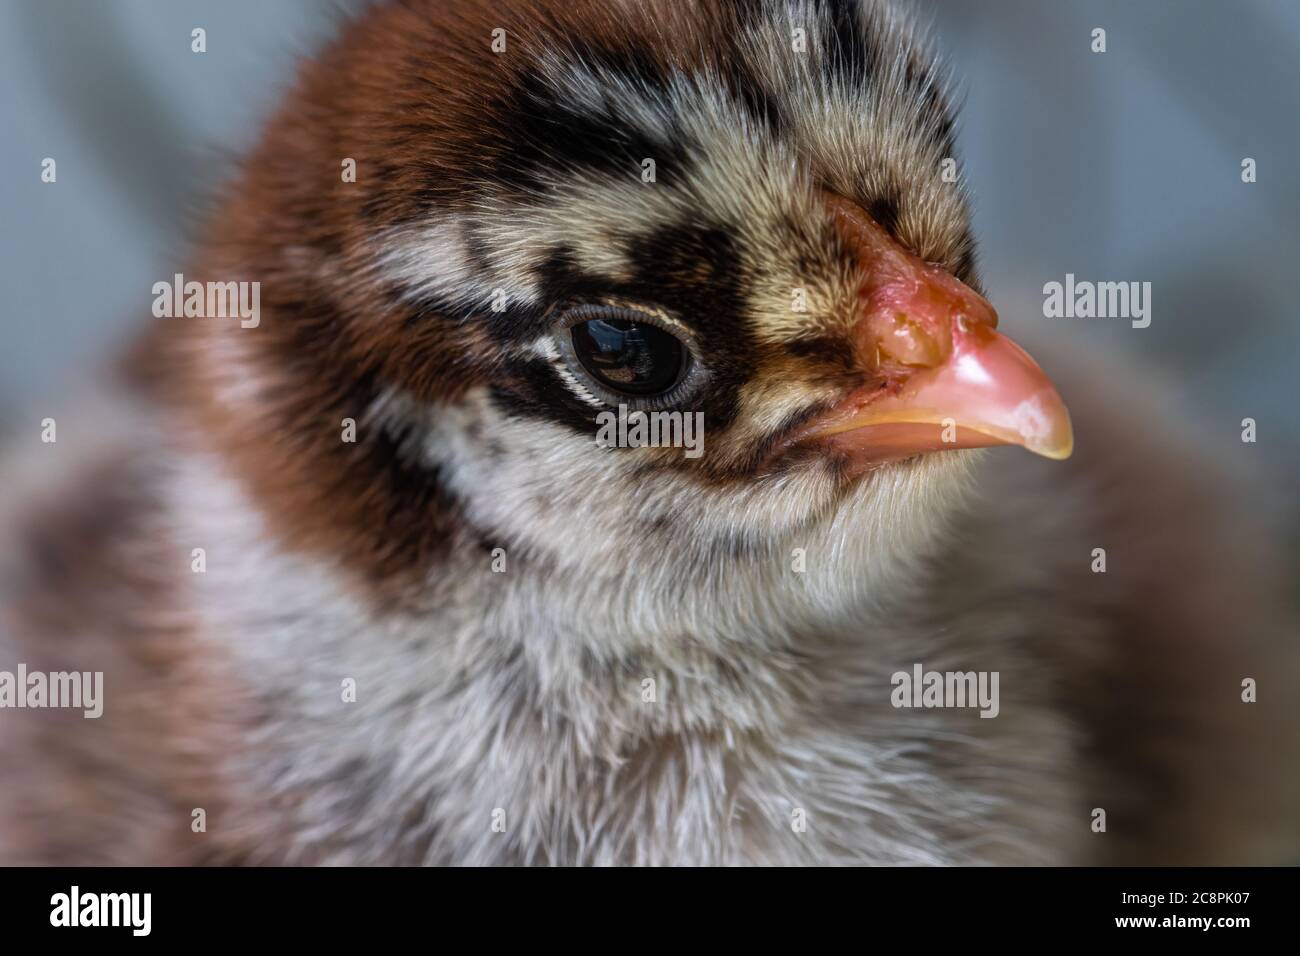 Young Dark Brahma Chicken (Gallus gallus Stock Photo - Alamy